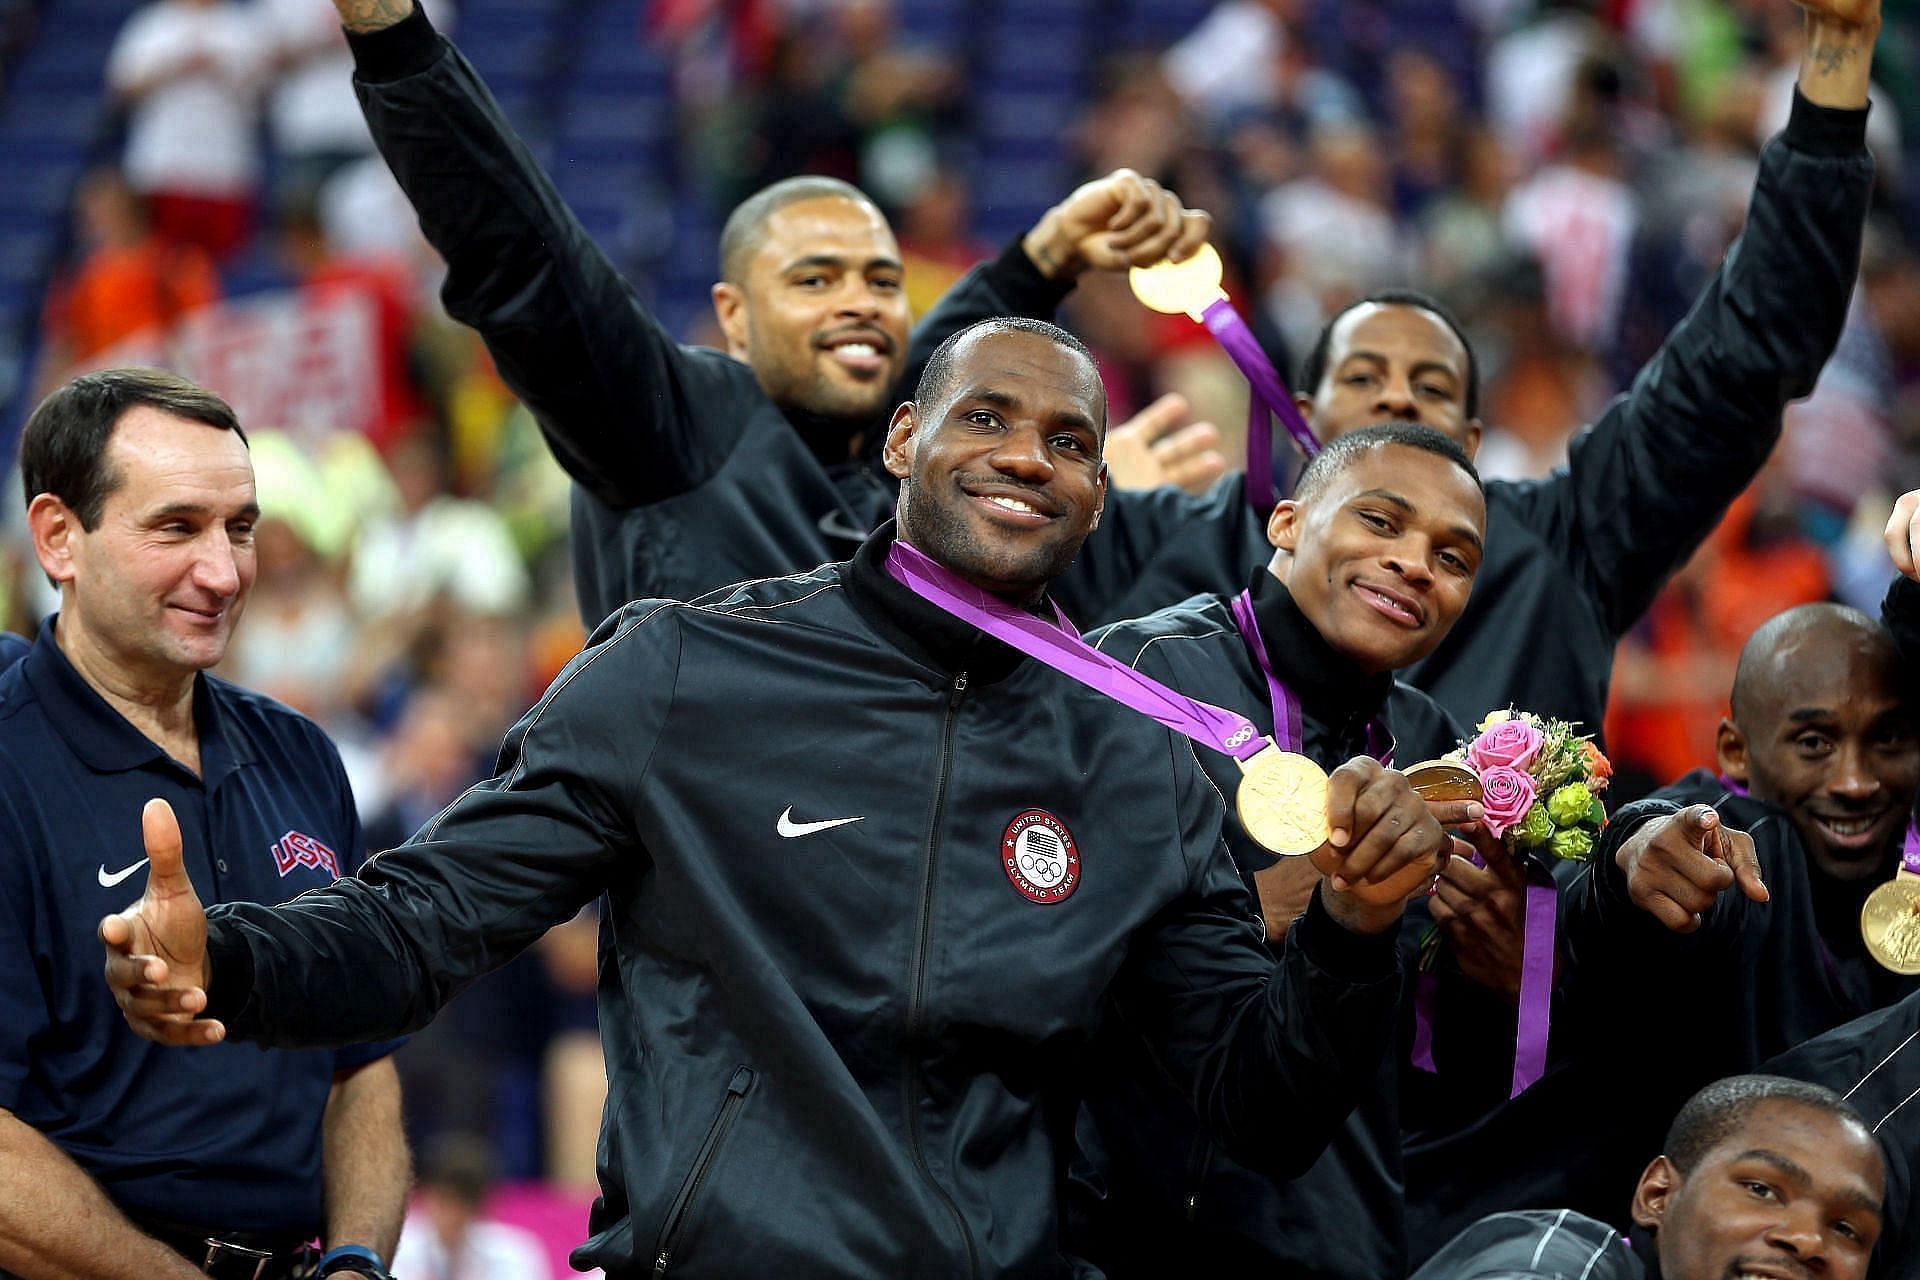 LeBron James Olympics Gold Medal